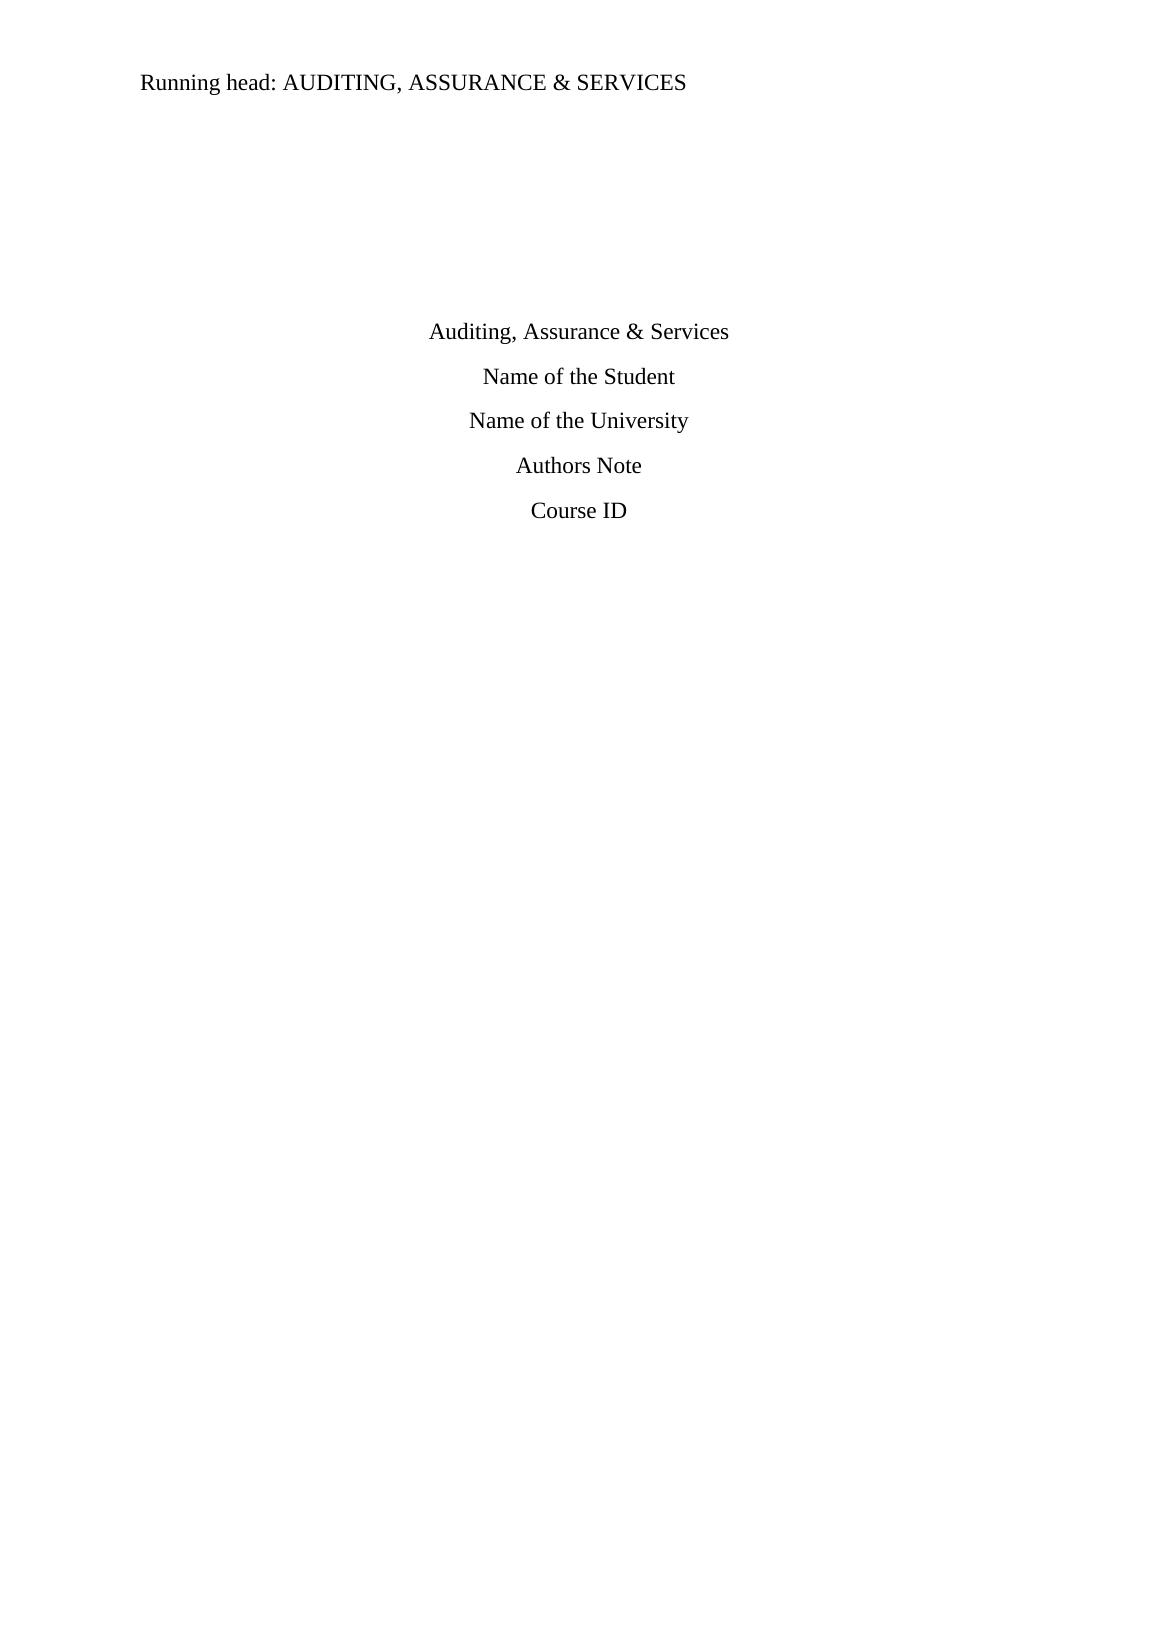 Auditing, Assurance & Services Assignment_1